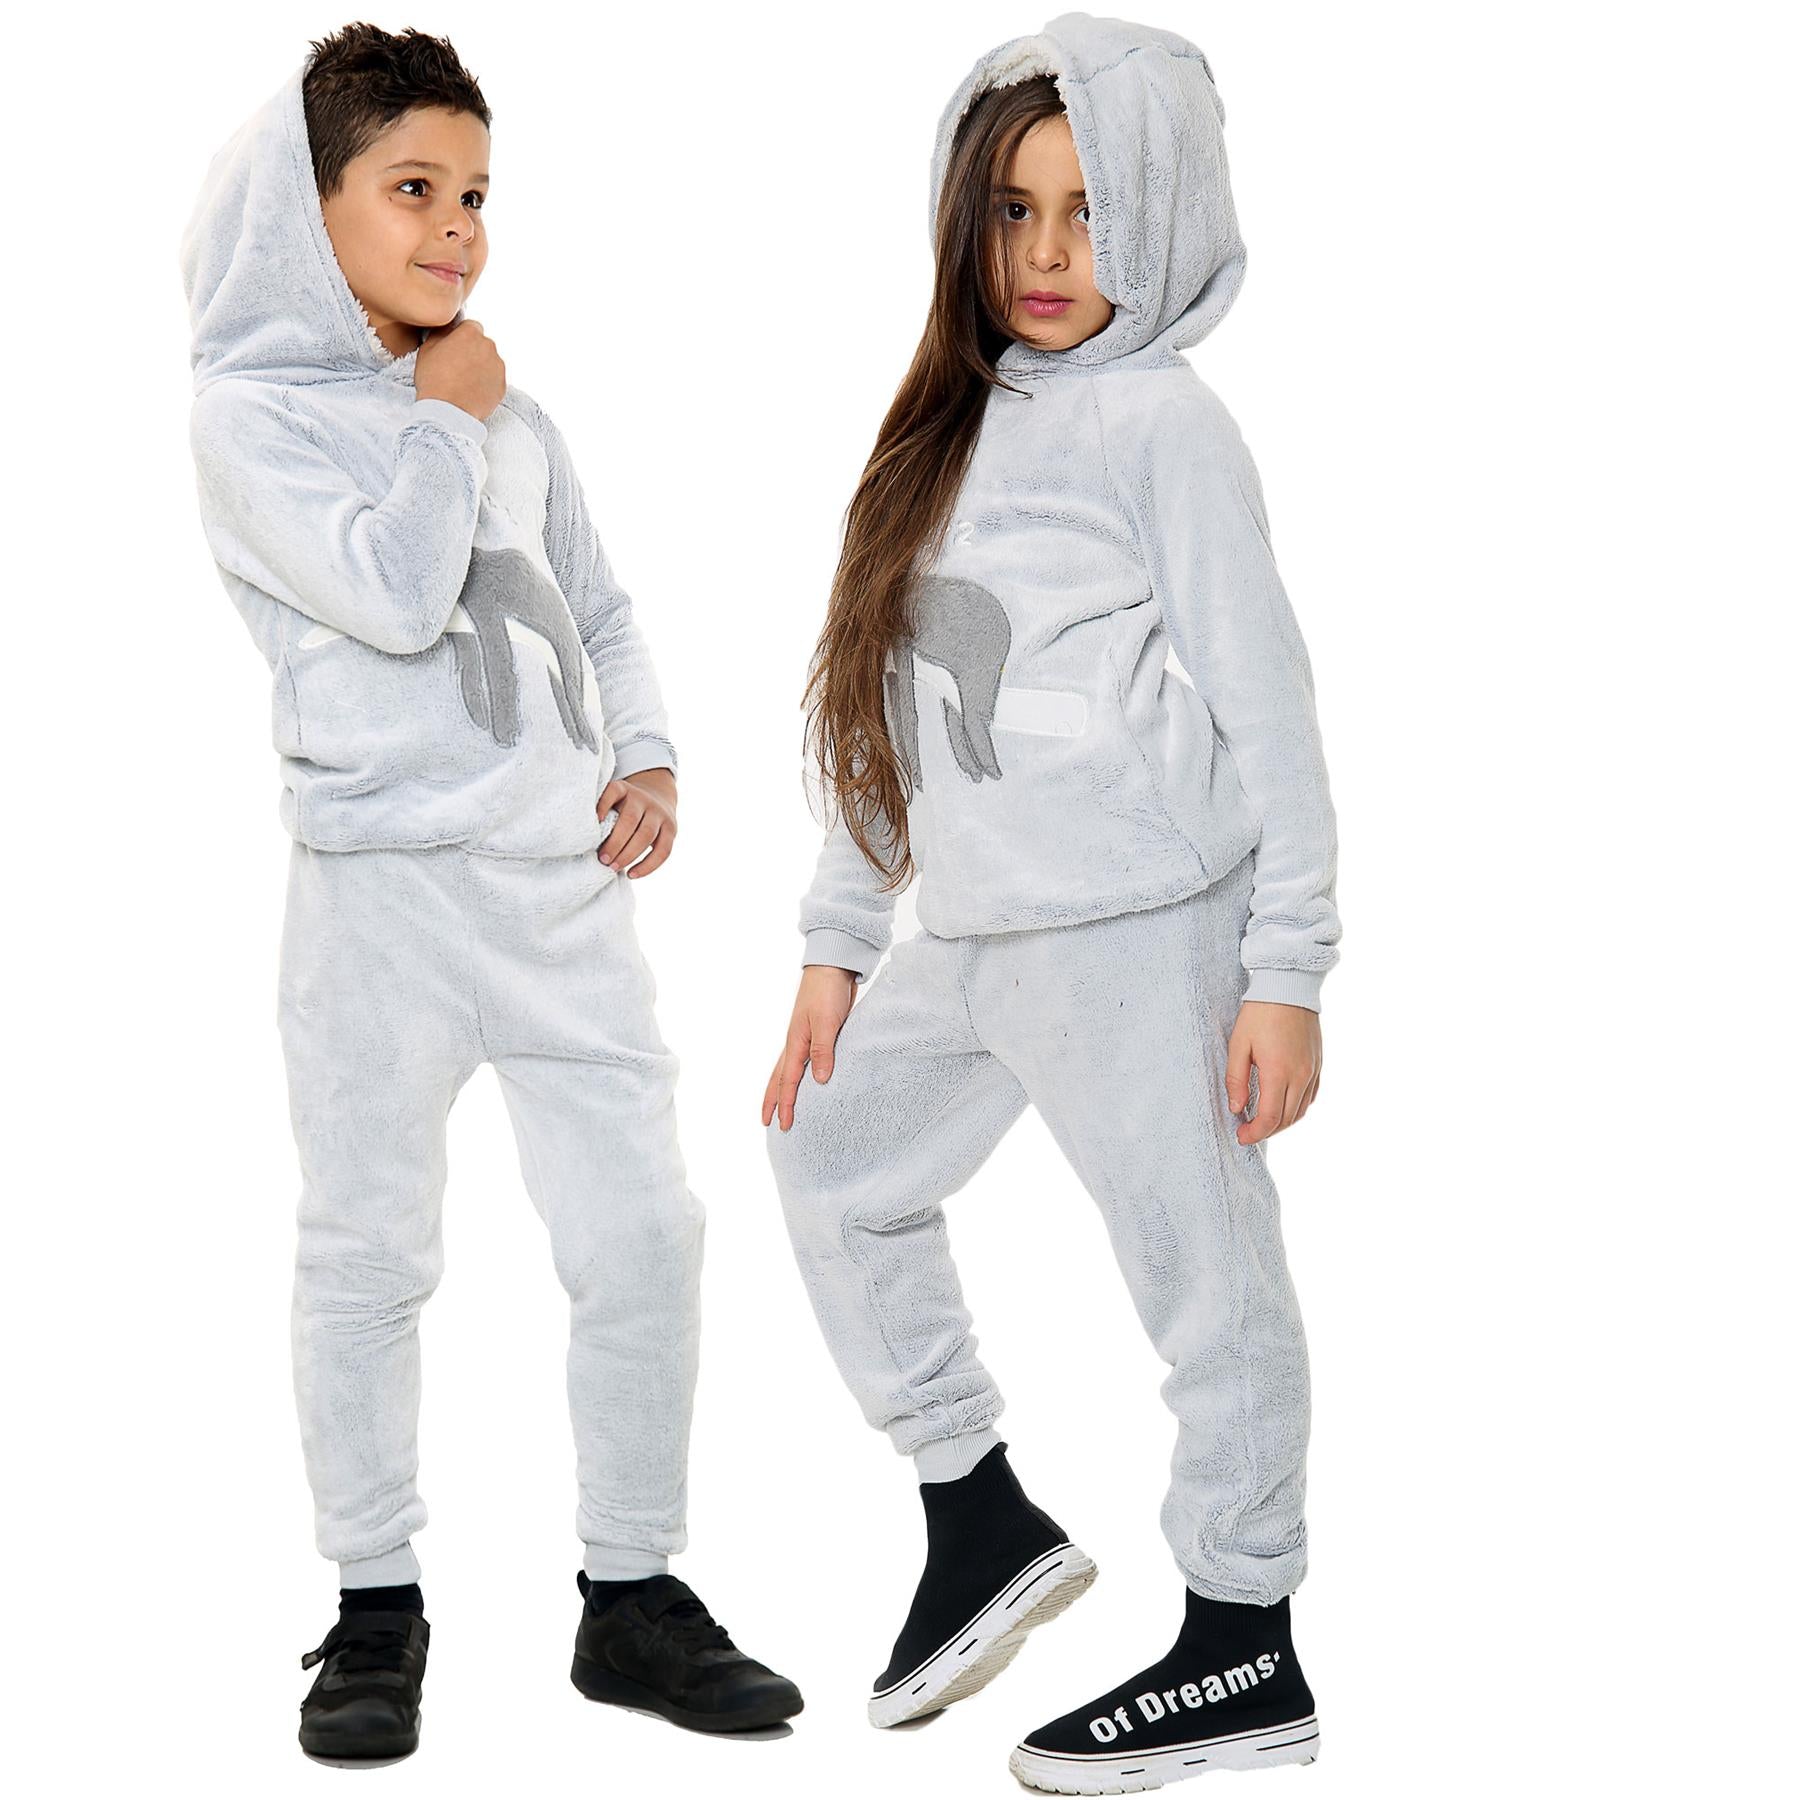 Girls Boys Sloth Print Fleece Pyjamas.